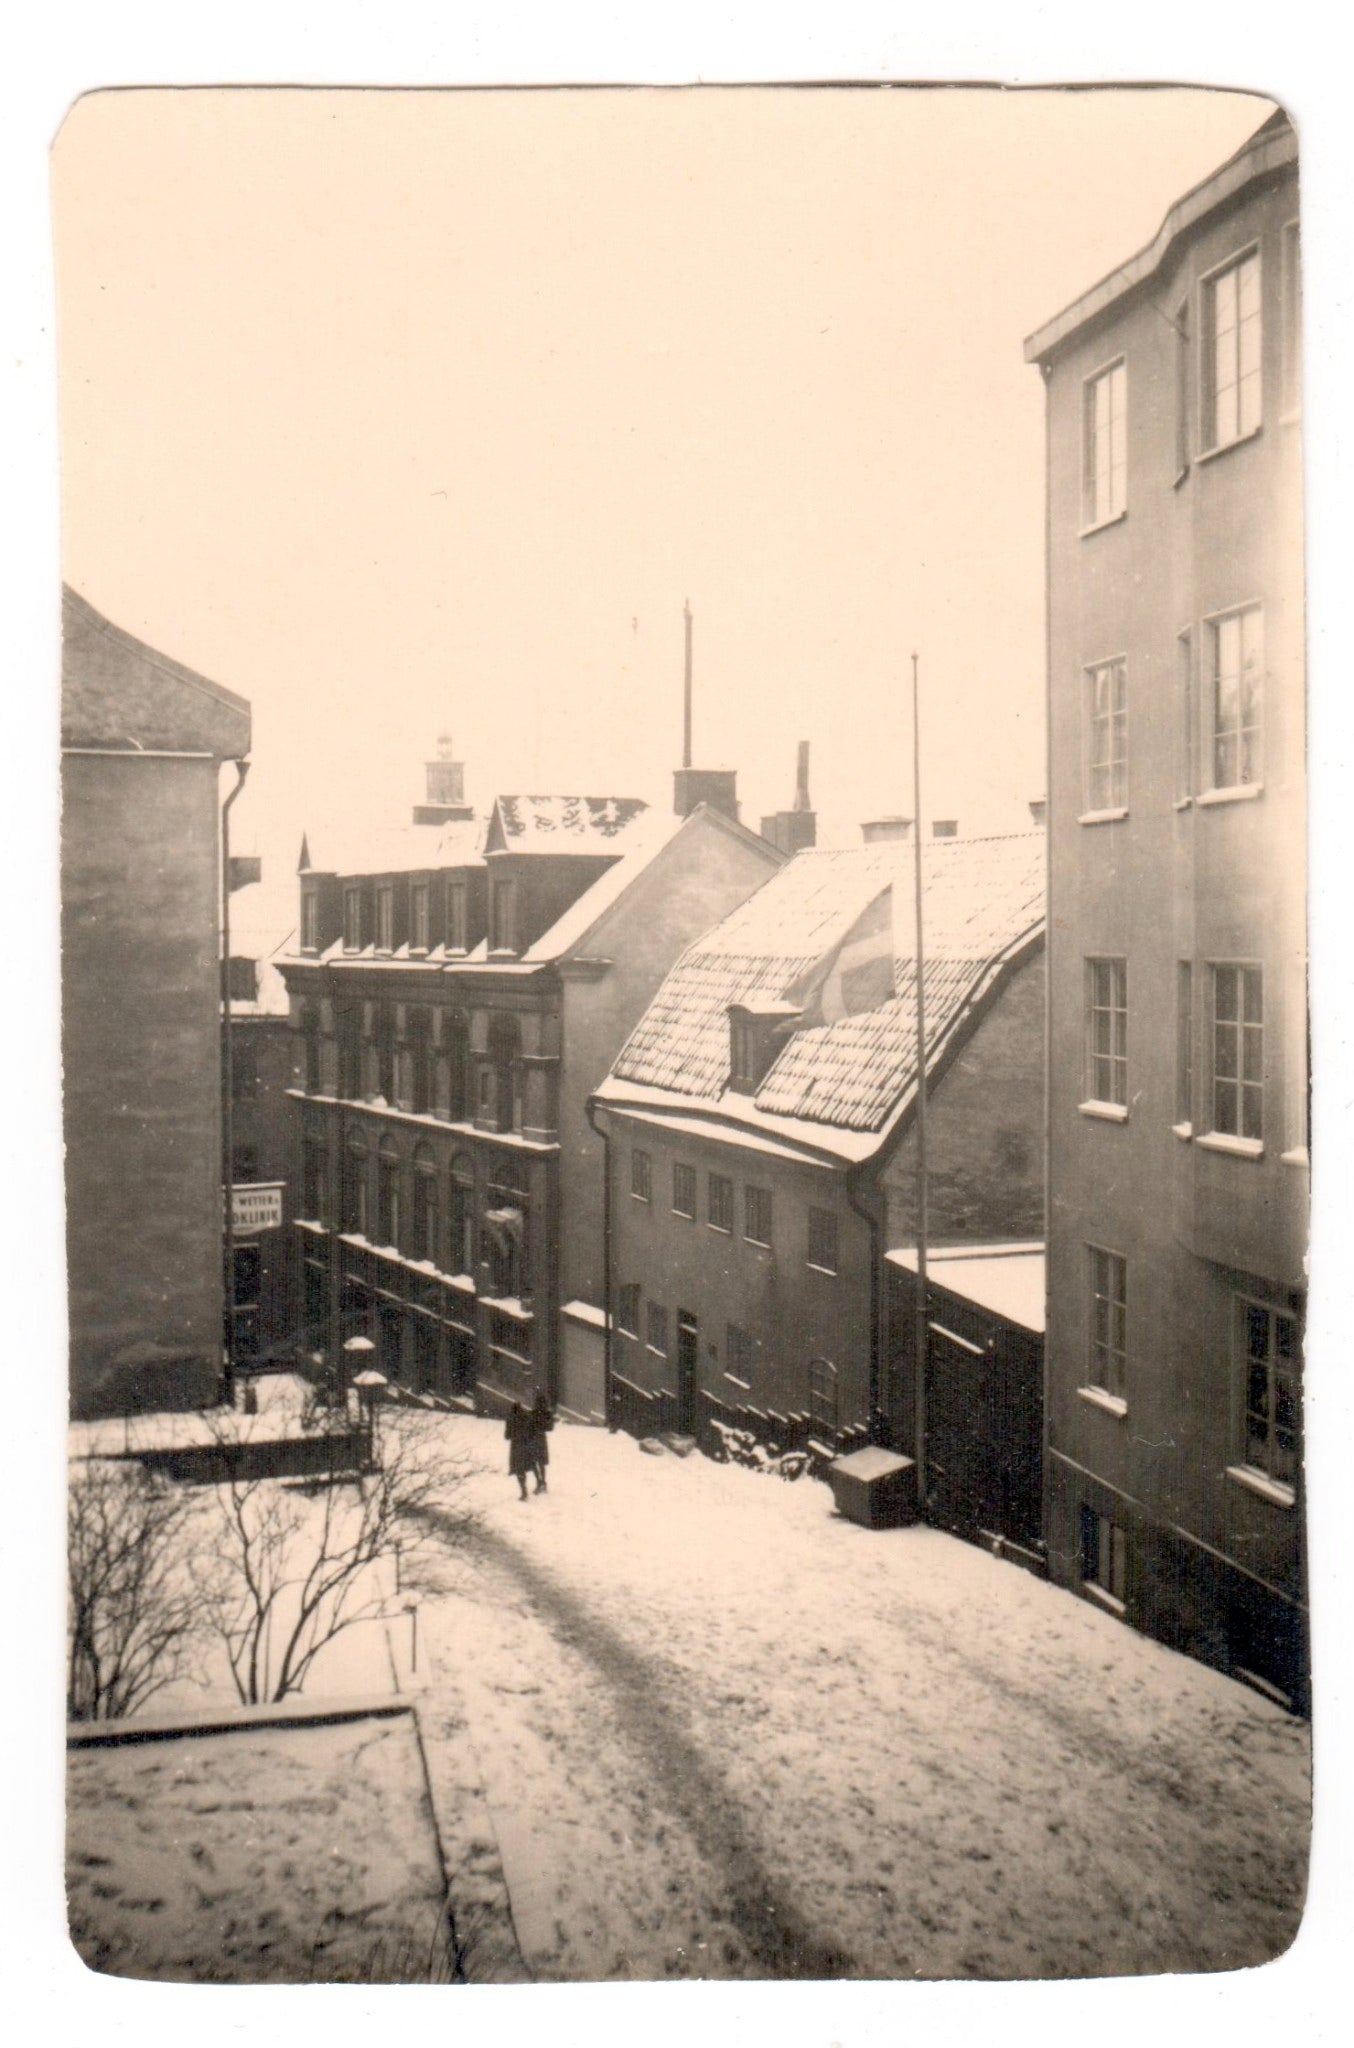 Vintage Photo - Photo Streets - Winter City - European Architecture - Sweden